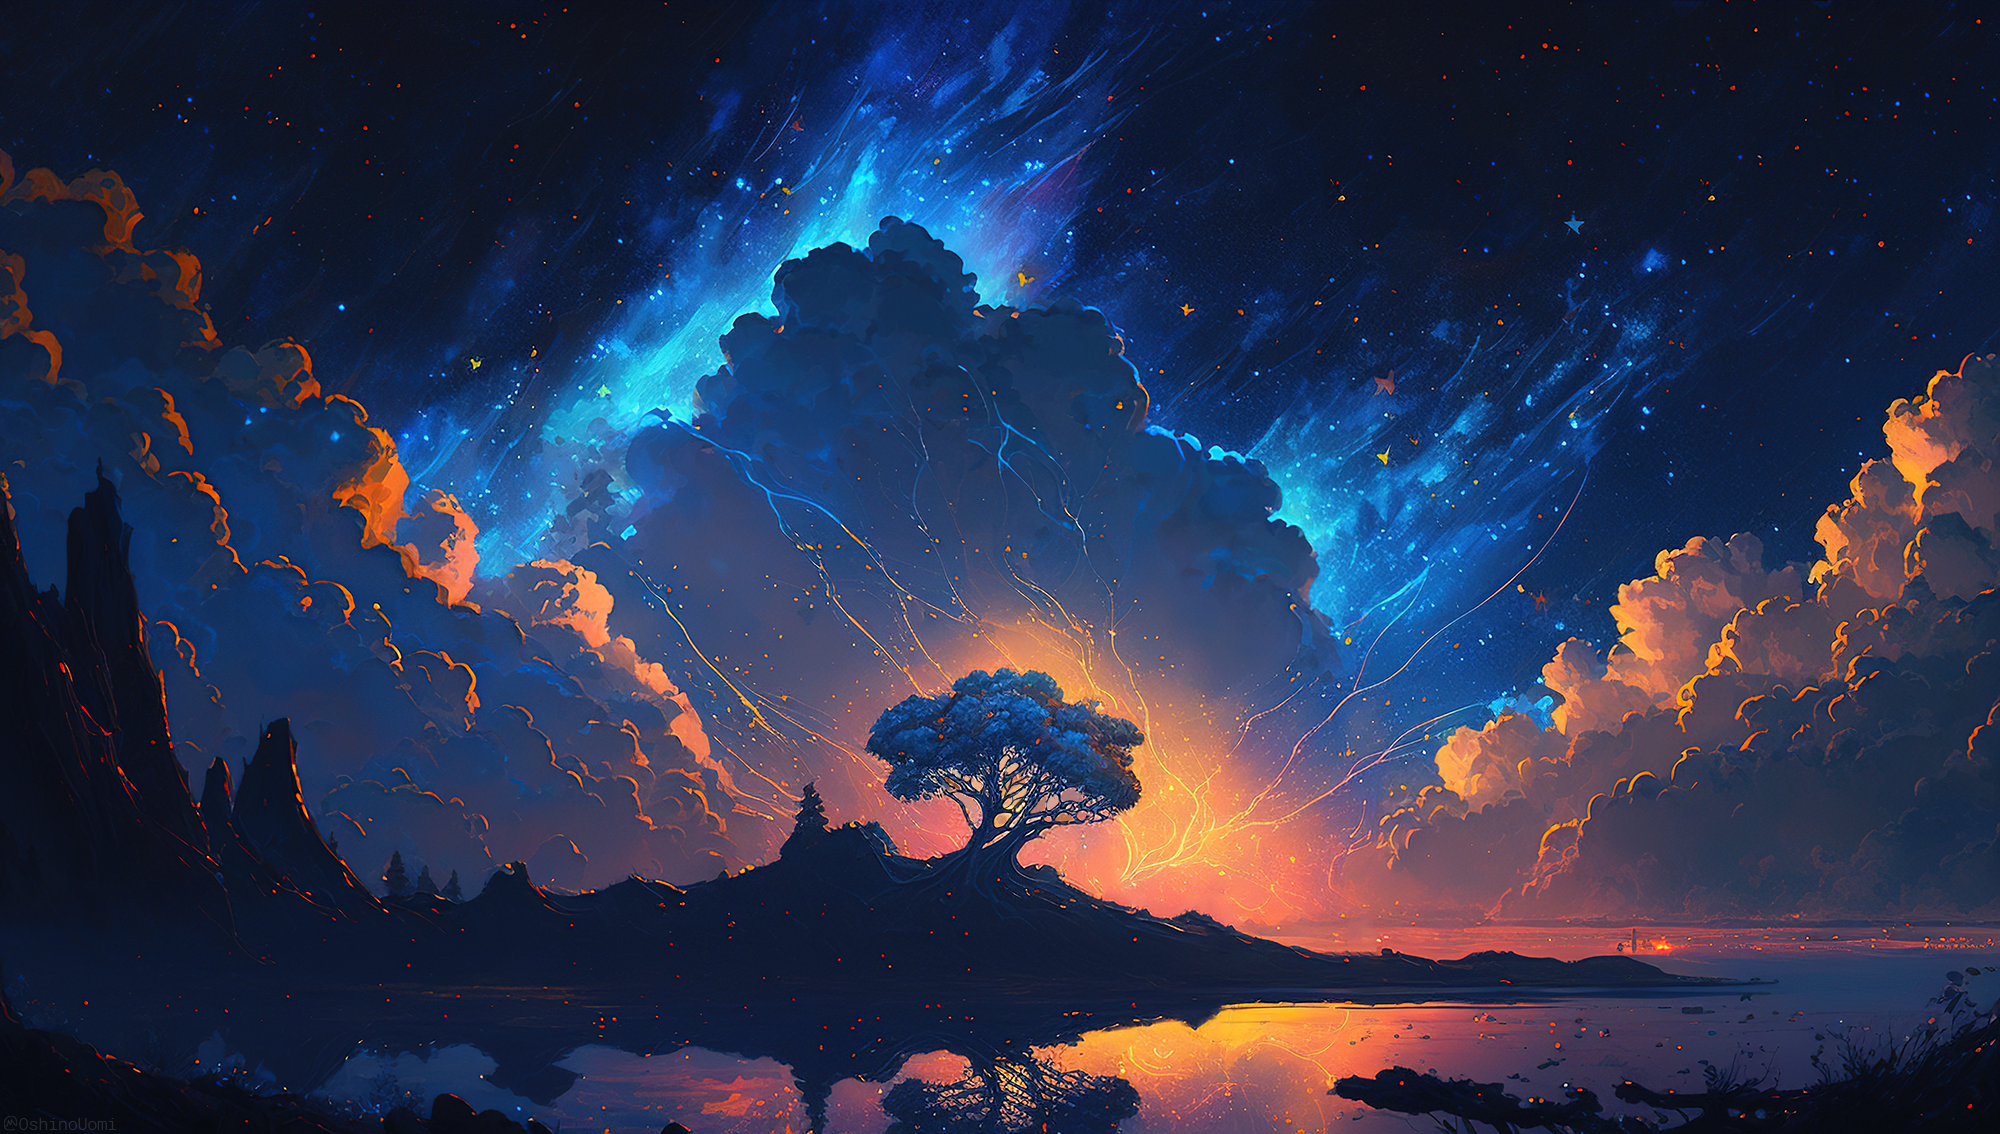 General 2000x1134 Uomi illustration artwork AI art landscape night sky clouds starry night sea reflection water stars